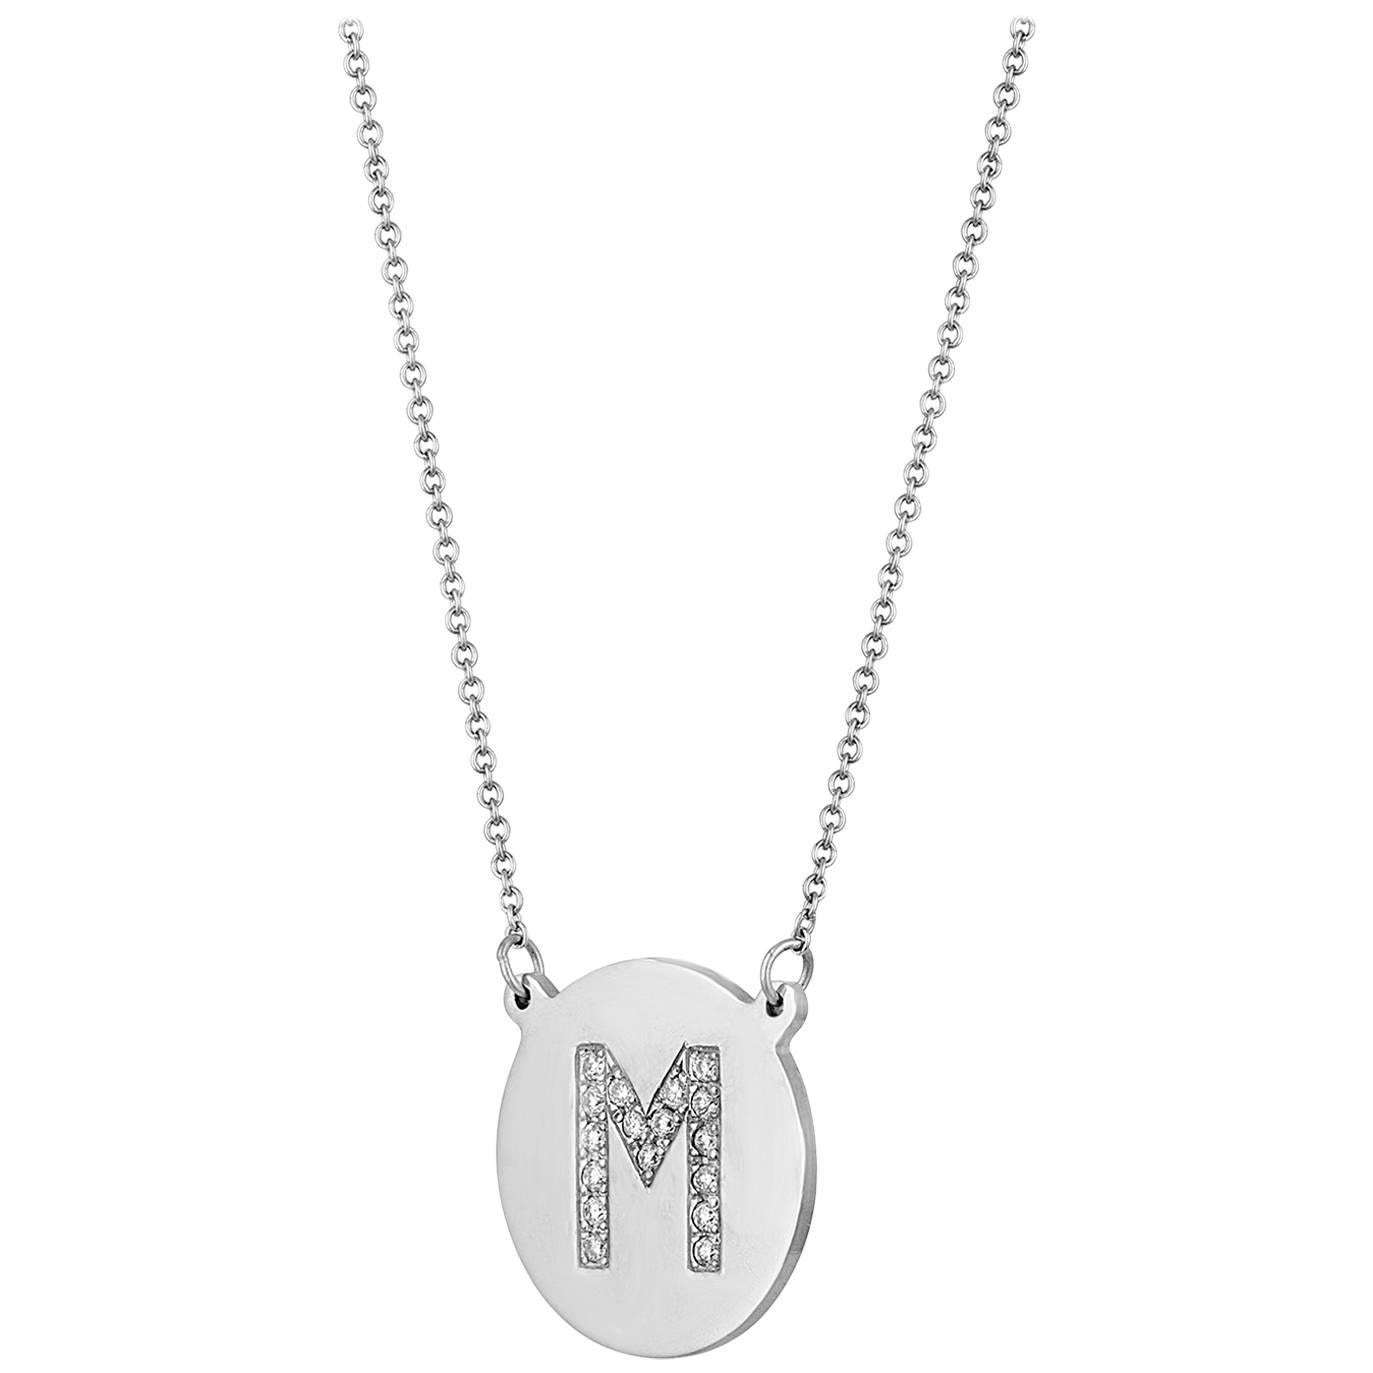 0.13 Carats Diamond Initial Letter "M"  Gold Pendant Charm Necklace